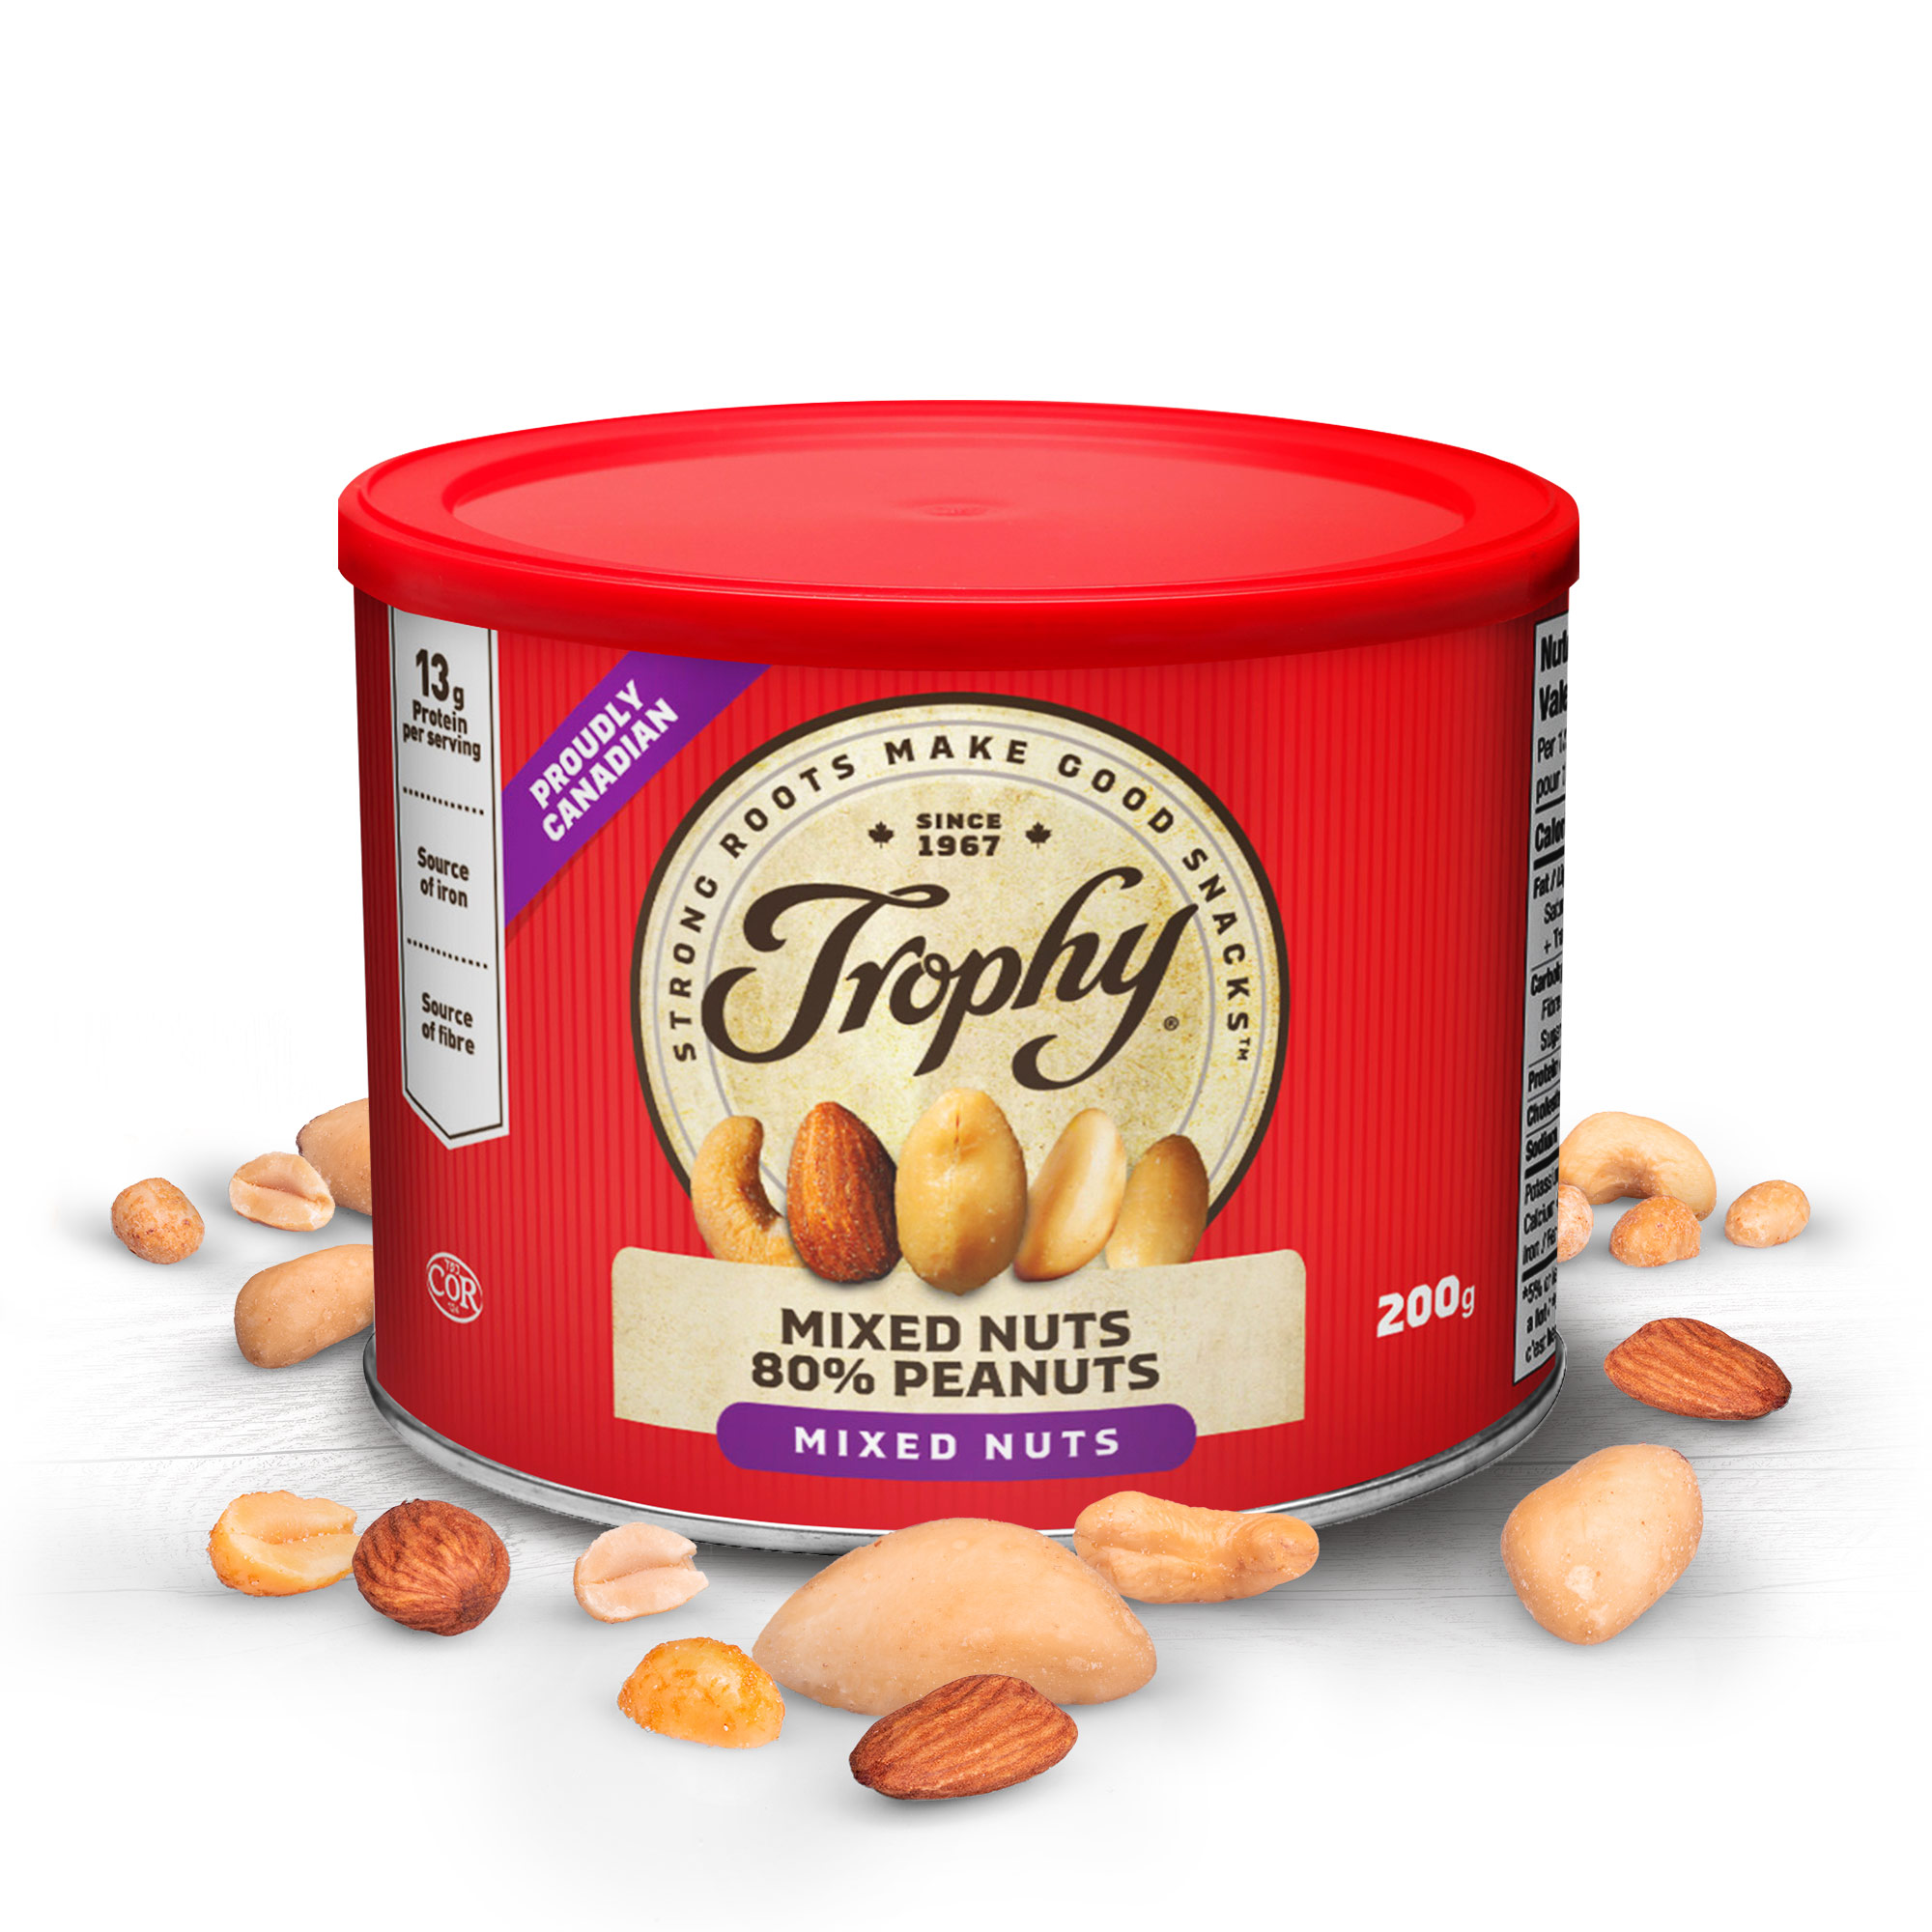 Mixed Nuts 80% Peanuts